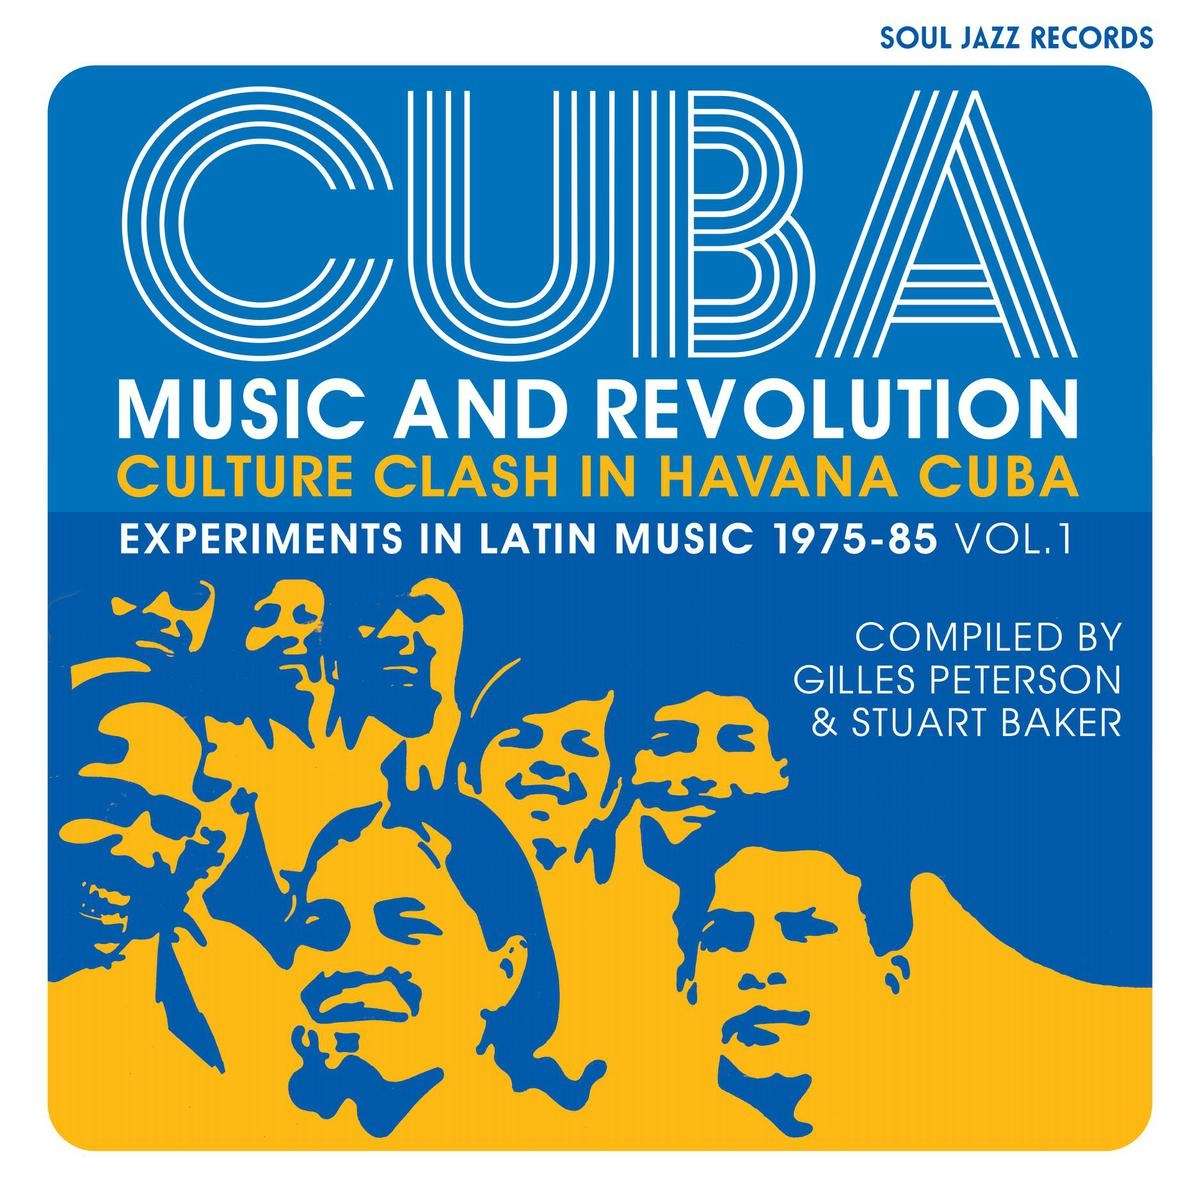 Cuba: Music And Revolution 1975 1985 Vol. 1 - 33RPM